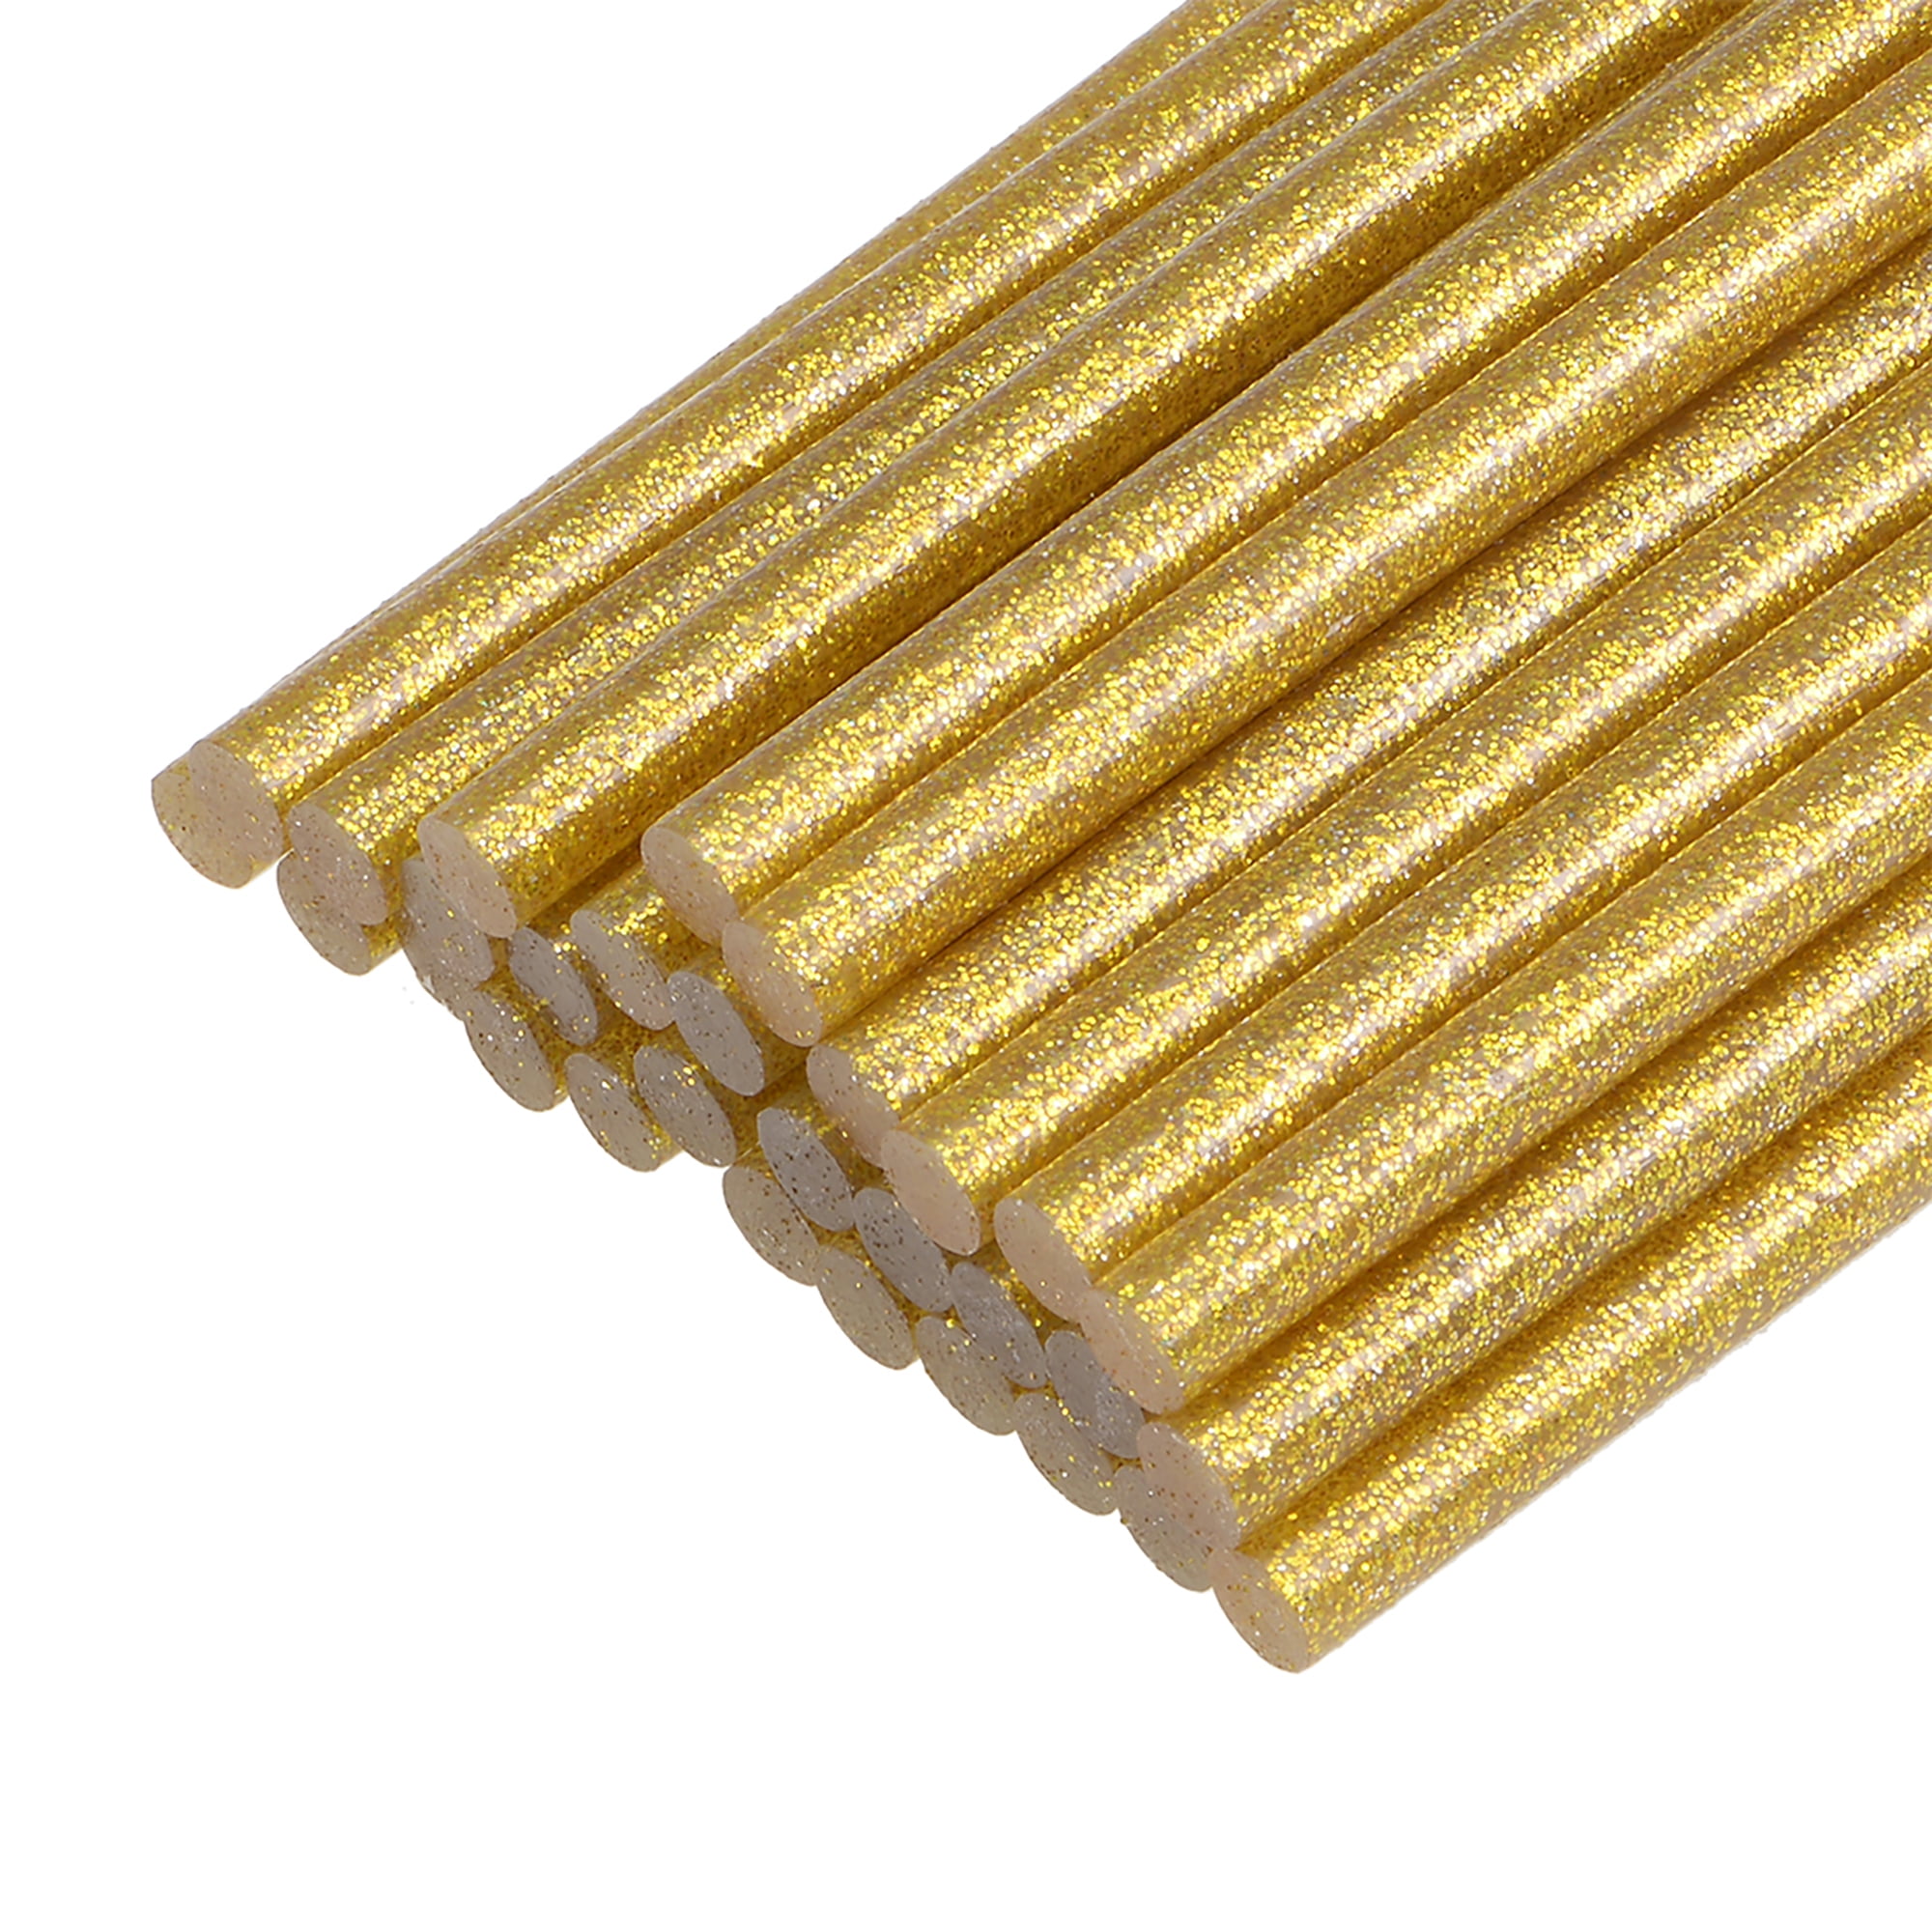 GlueSticksDirect Gold Metallic Colored Glue Sticks 7/16 X 4 5 lbs